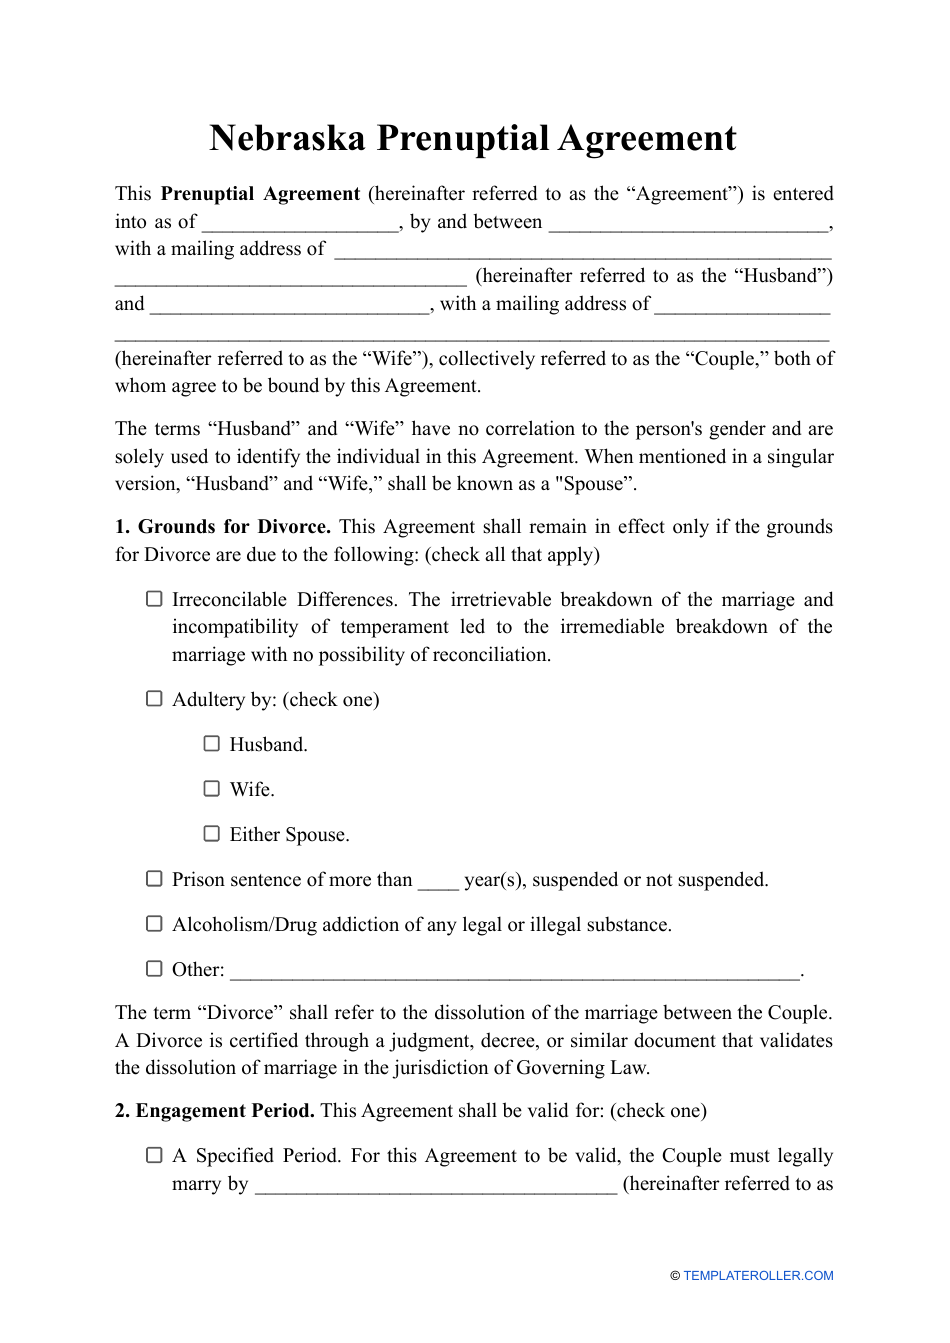 Prenuptial Agreement Template - Nebraska, Page 1